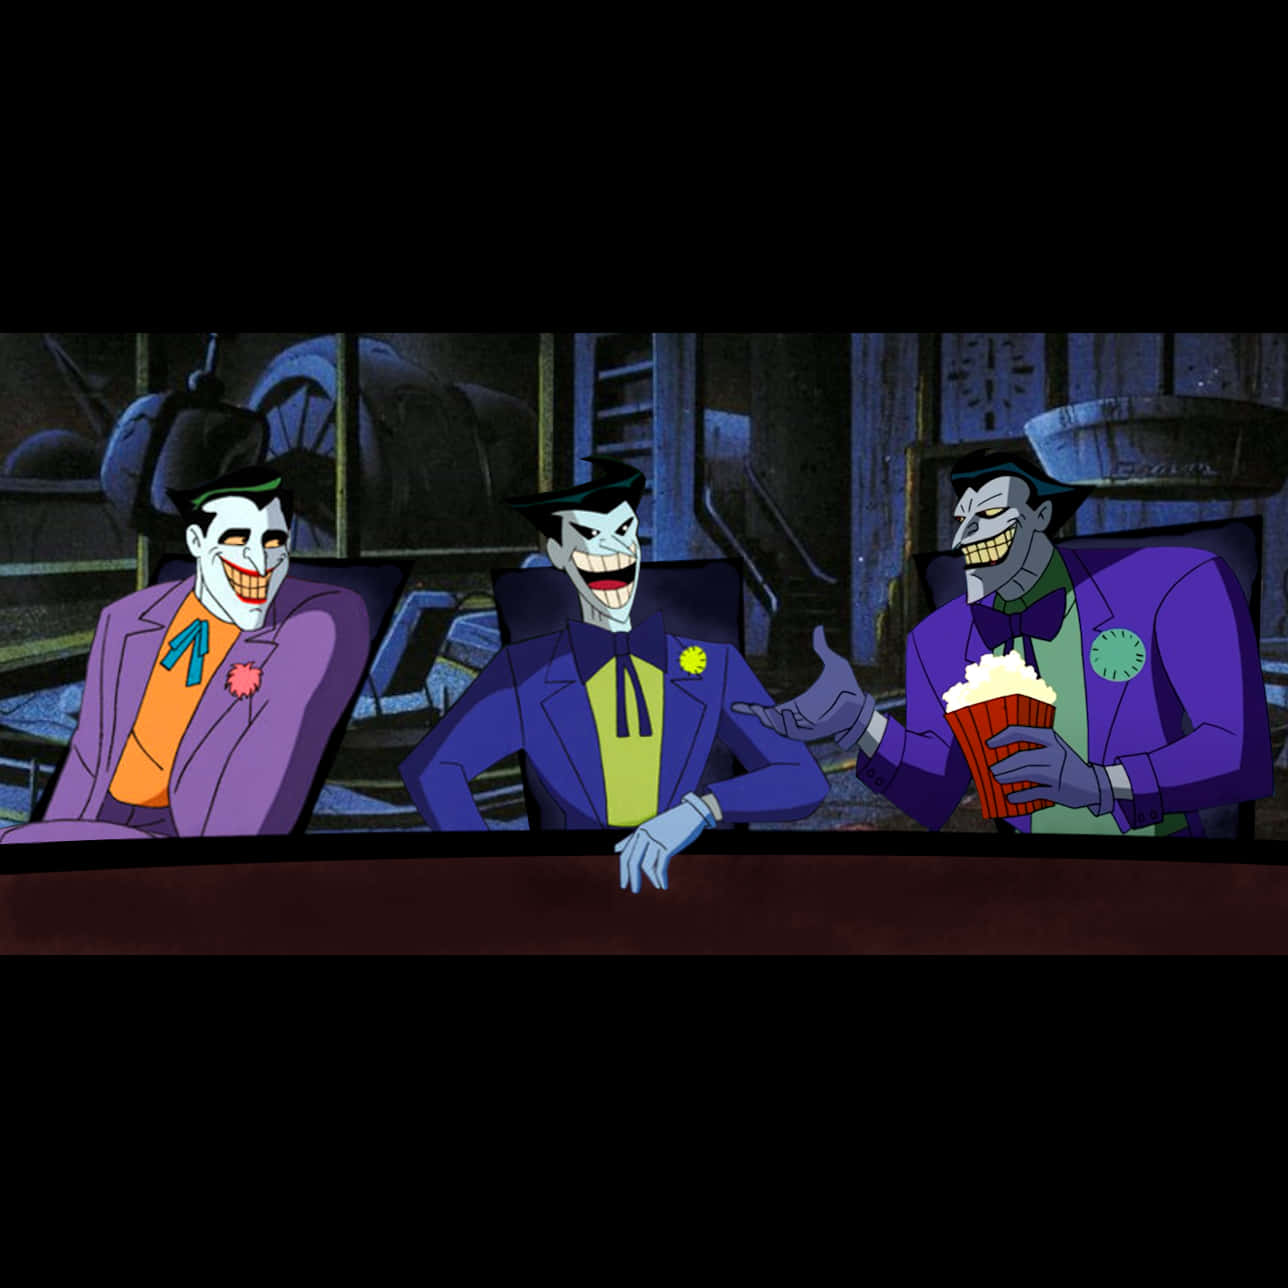 The Dark Knight faces his three greatest adversaries in Batman: Three Jokers. Wallpaper